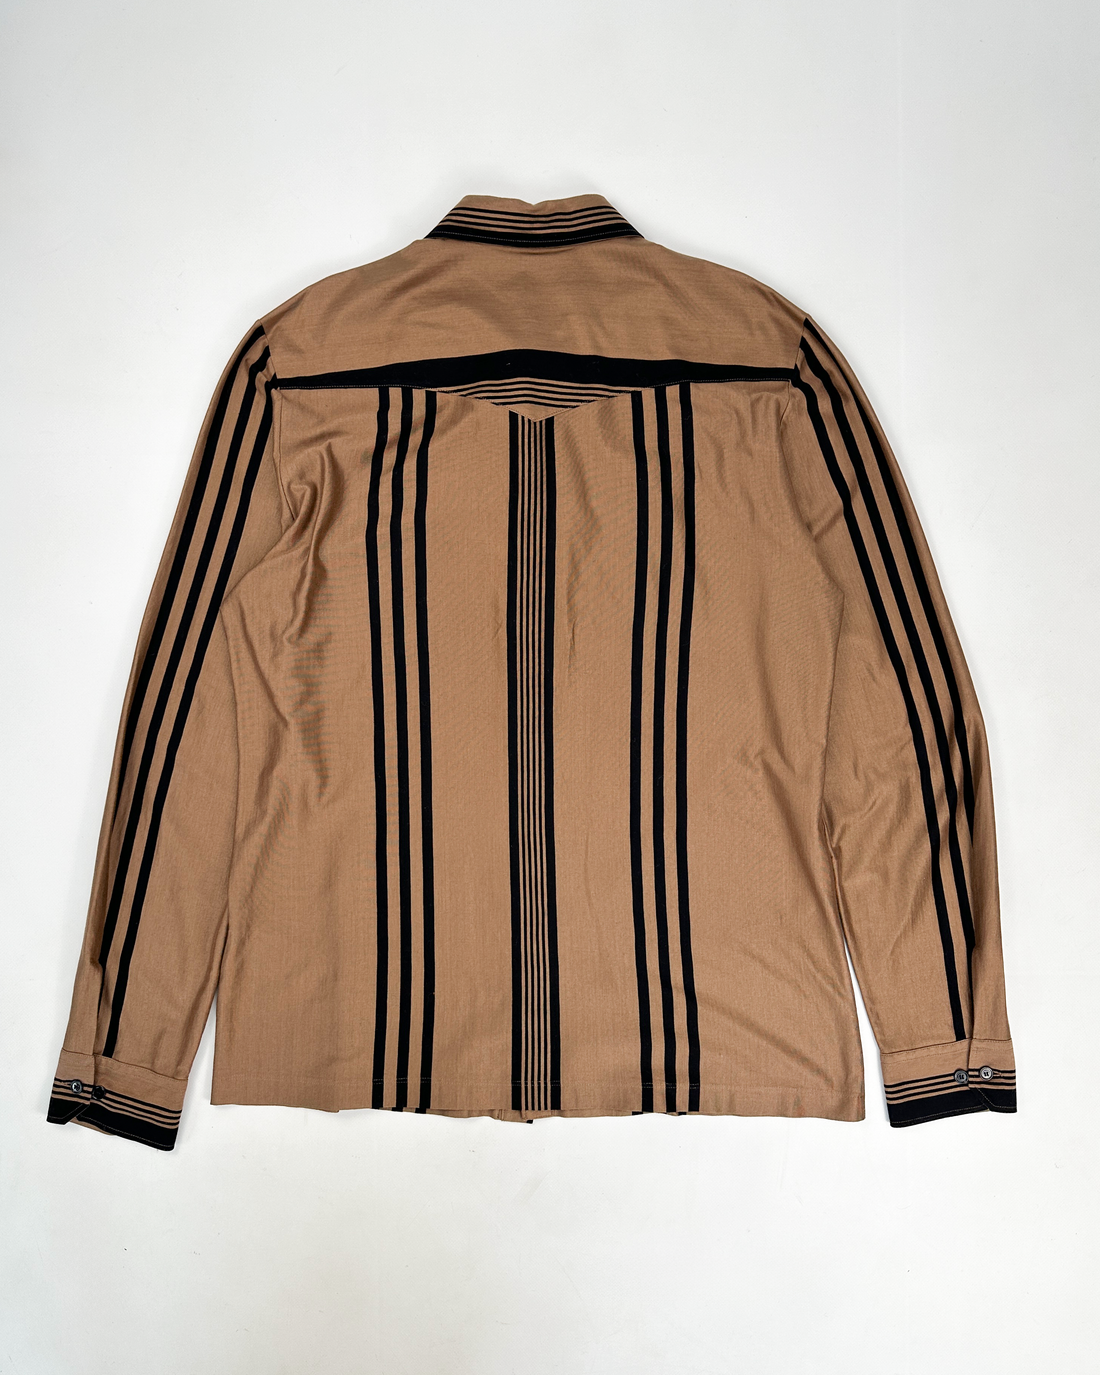 Bottega Veneta Striped Cowboy Shirt S/S 2018